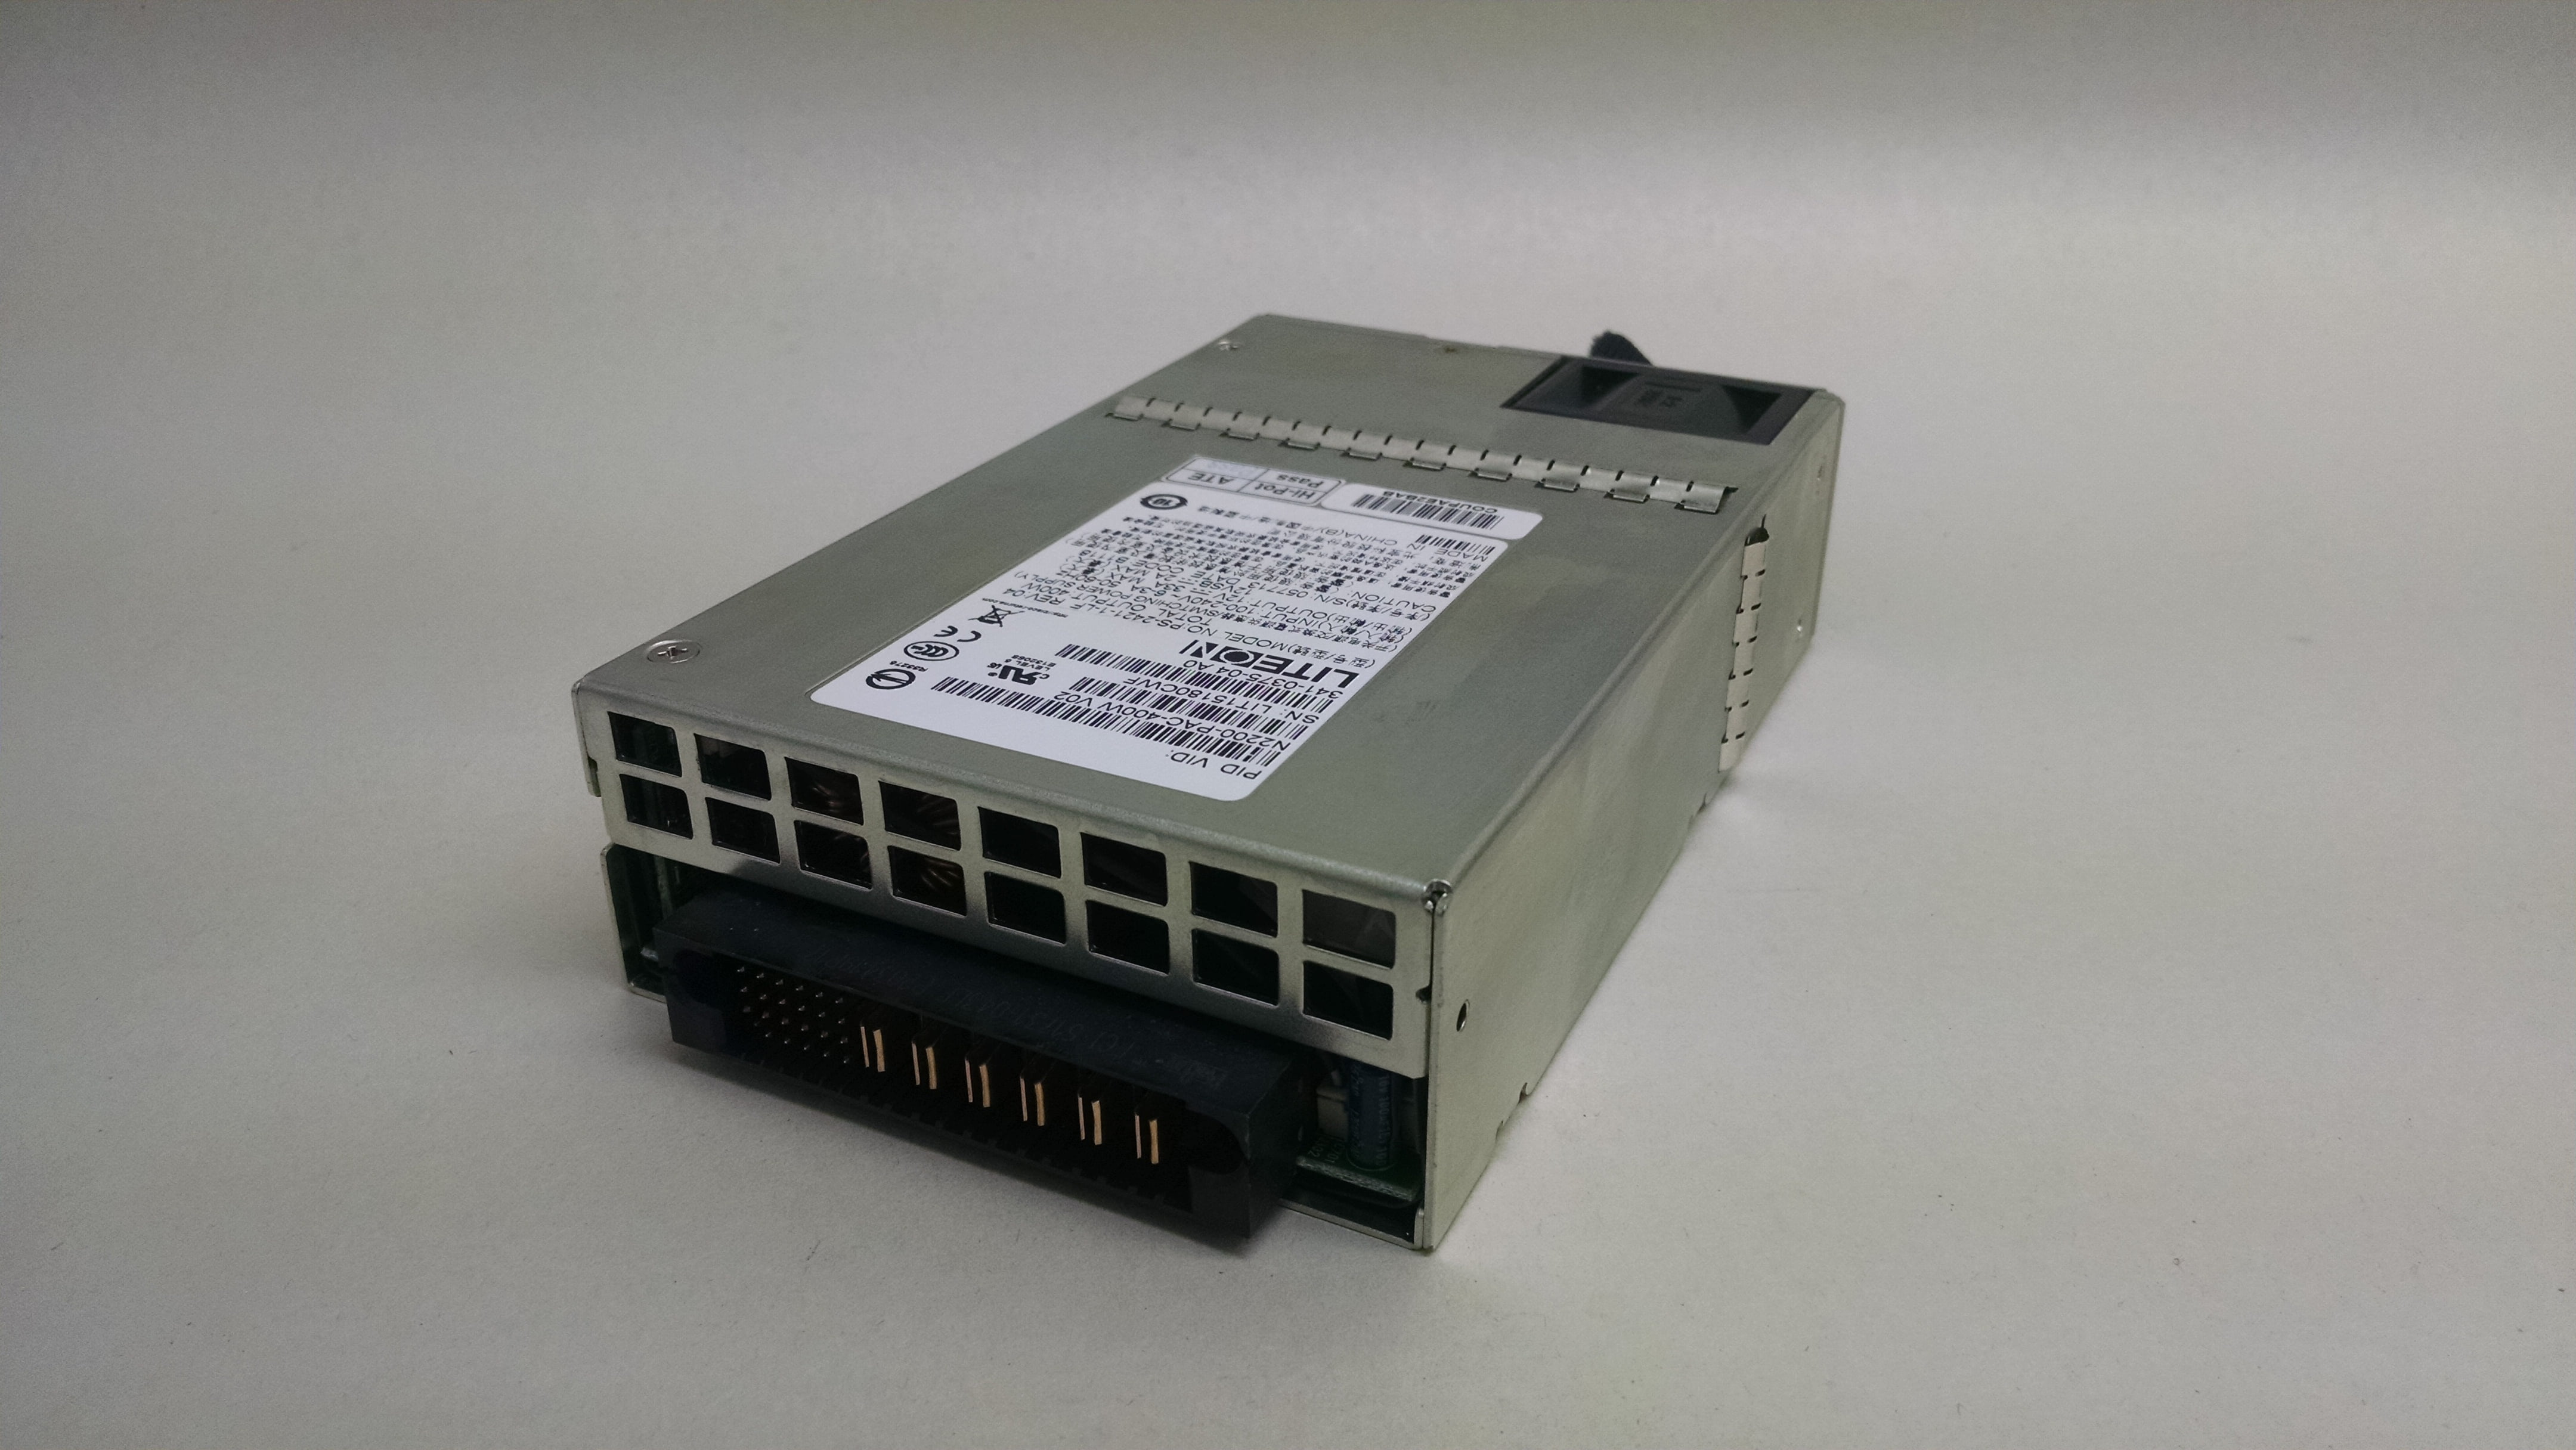 Lot of 5 Liteon PS-2421-1-LF 400W Hot Swap 1U Server Power Supply